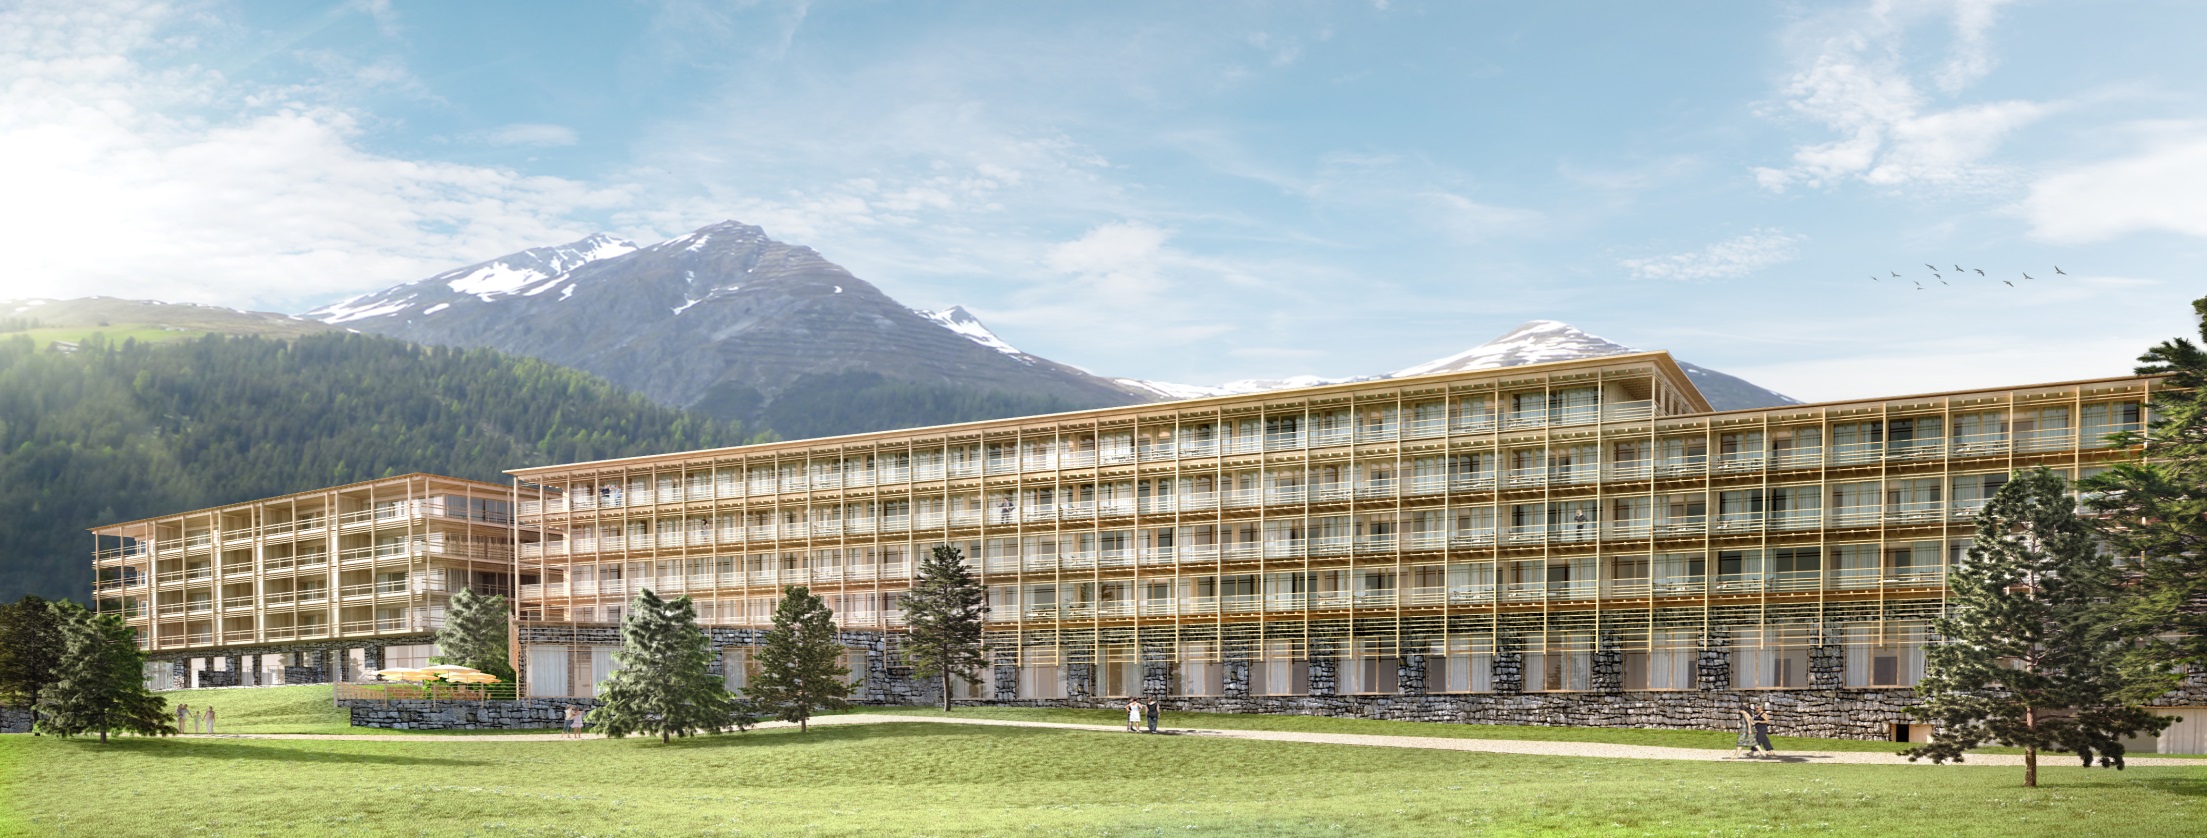 Symond Park, Davos Stand per Januar 2014 Facts and Figures Hotelprojekt im 4-Sterne-Plus-Segment mit 148 Zimmern auf 10'700 m 2, 3'700 m 2